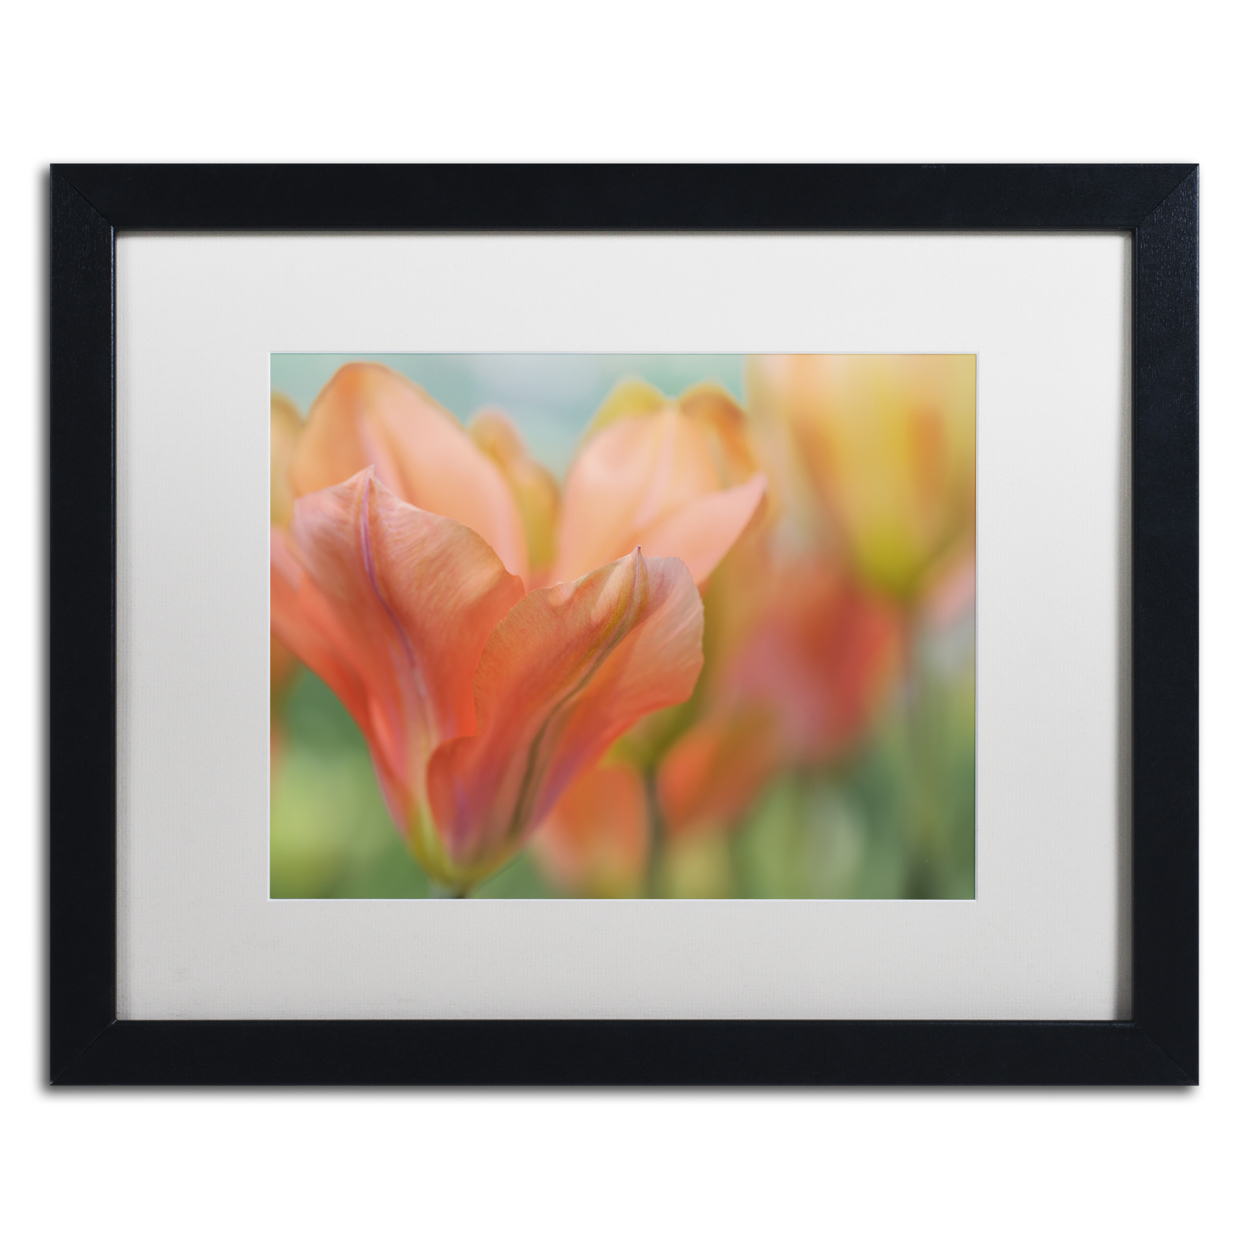 Cora Niele 'Orange Wings Tulips' Black Wooden Framed Art 18 X 22 Inches